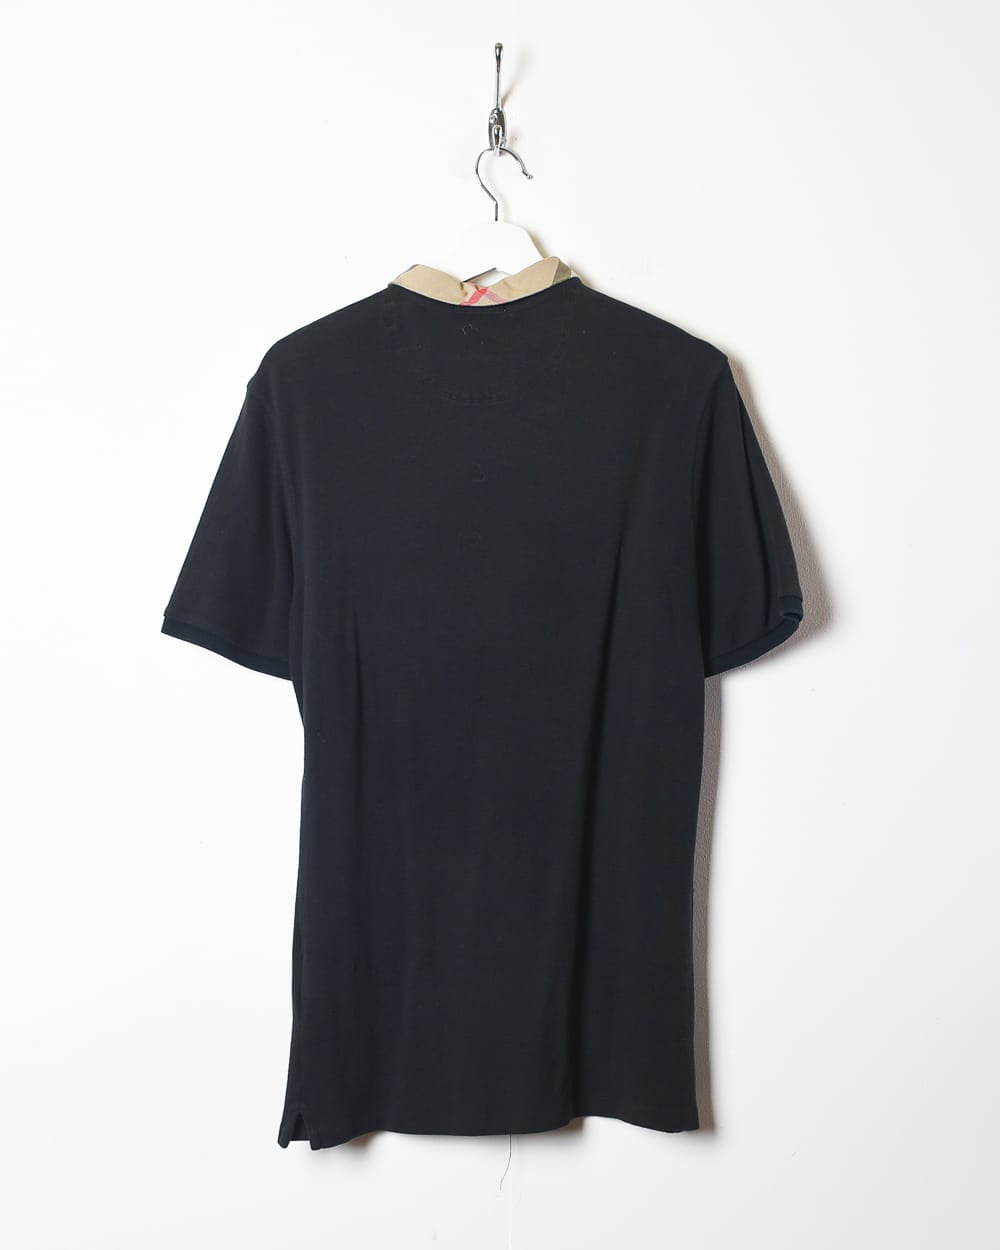 Black Burberry Brit Polo Shirt - Medium Women's